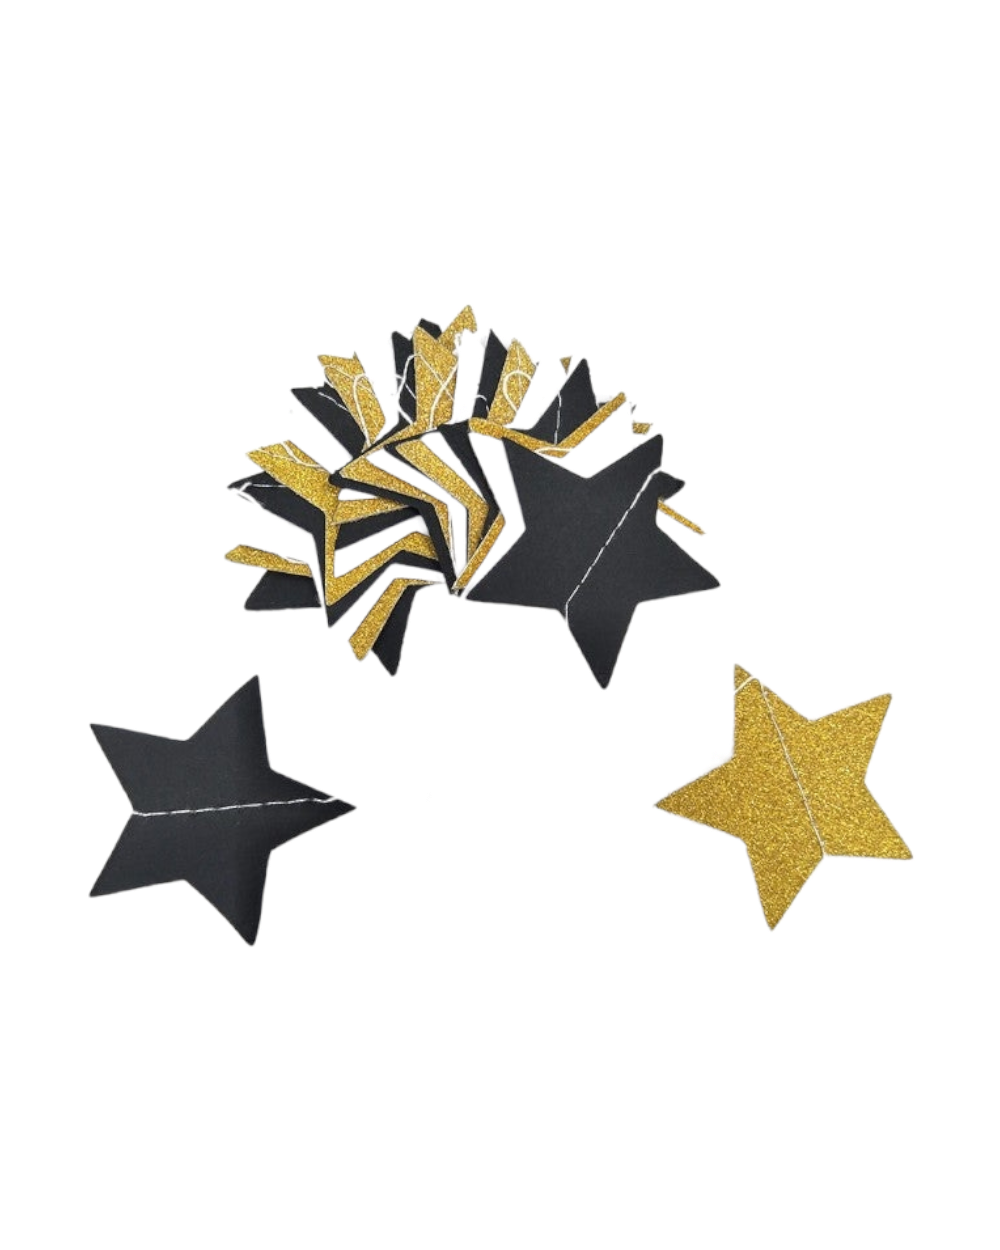 Glittery star banner - Black, white and gold